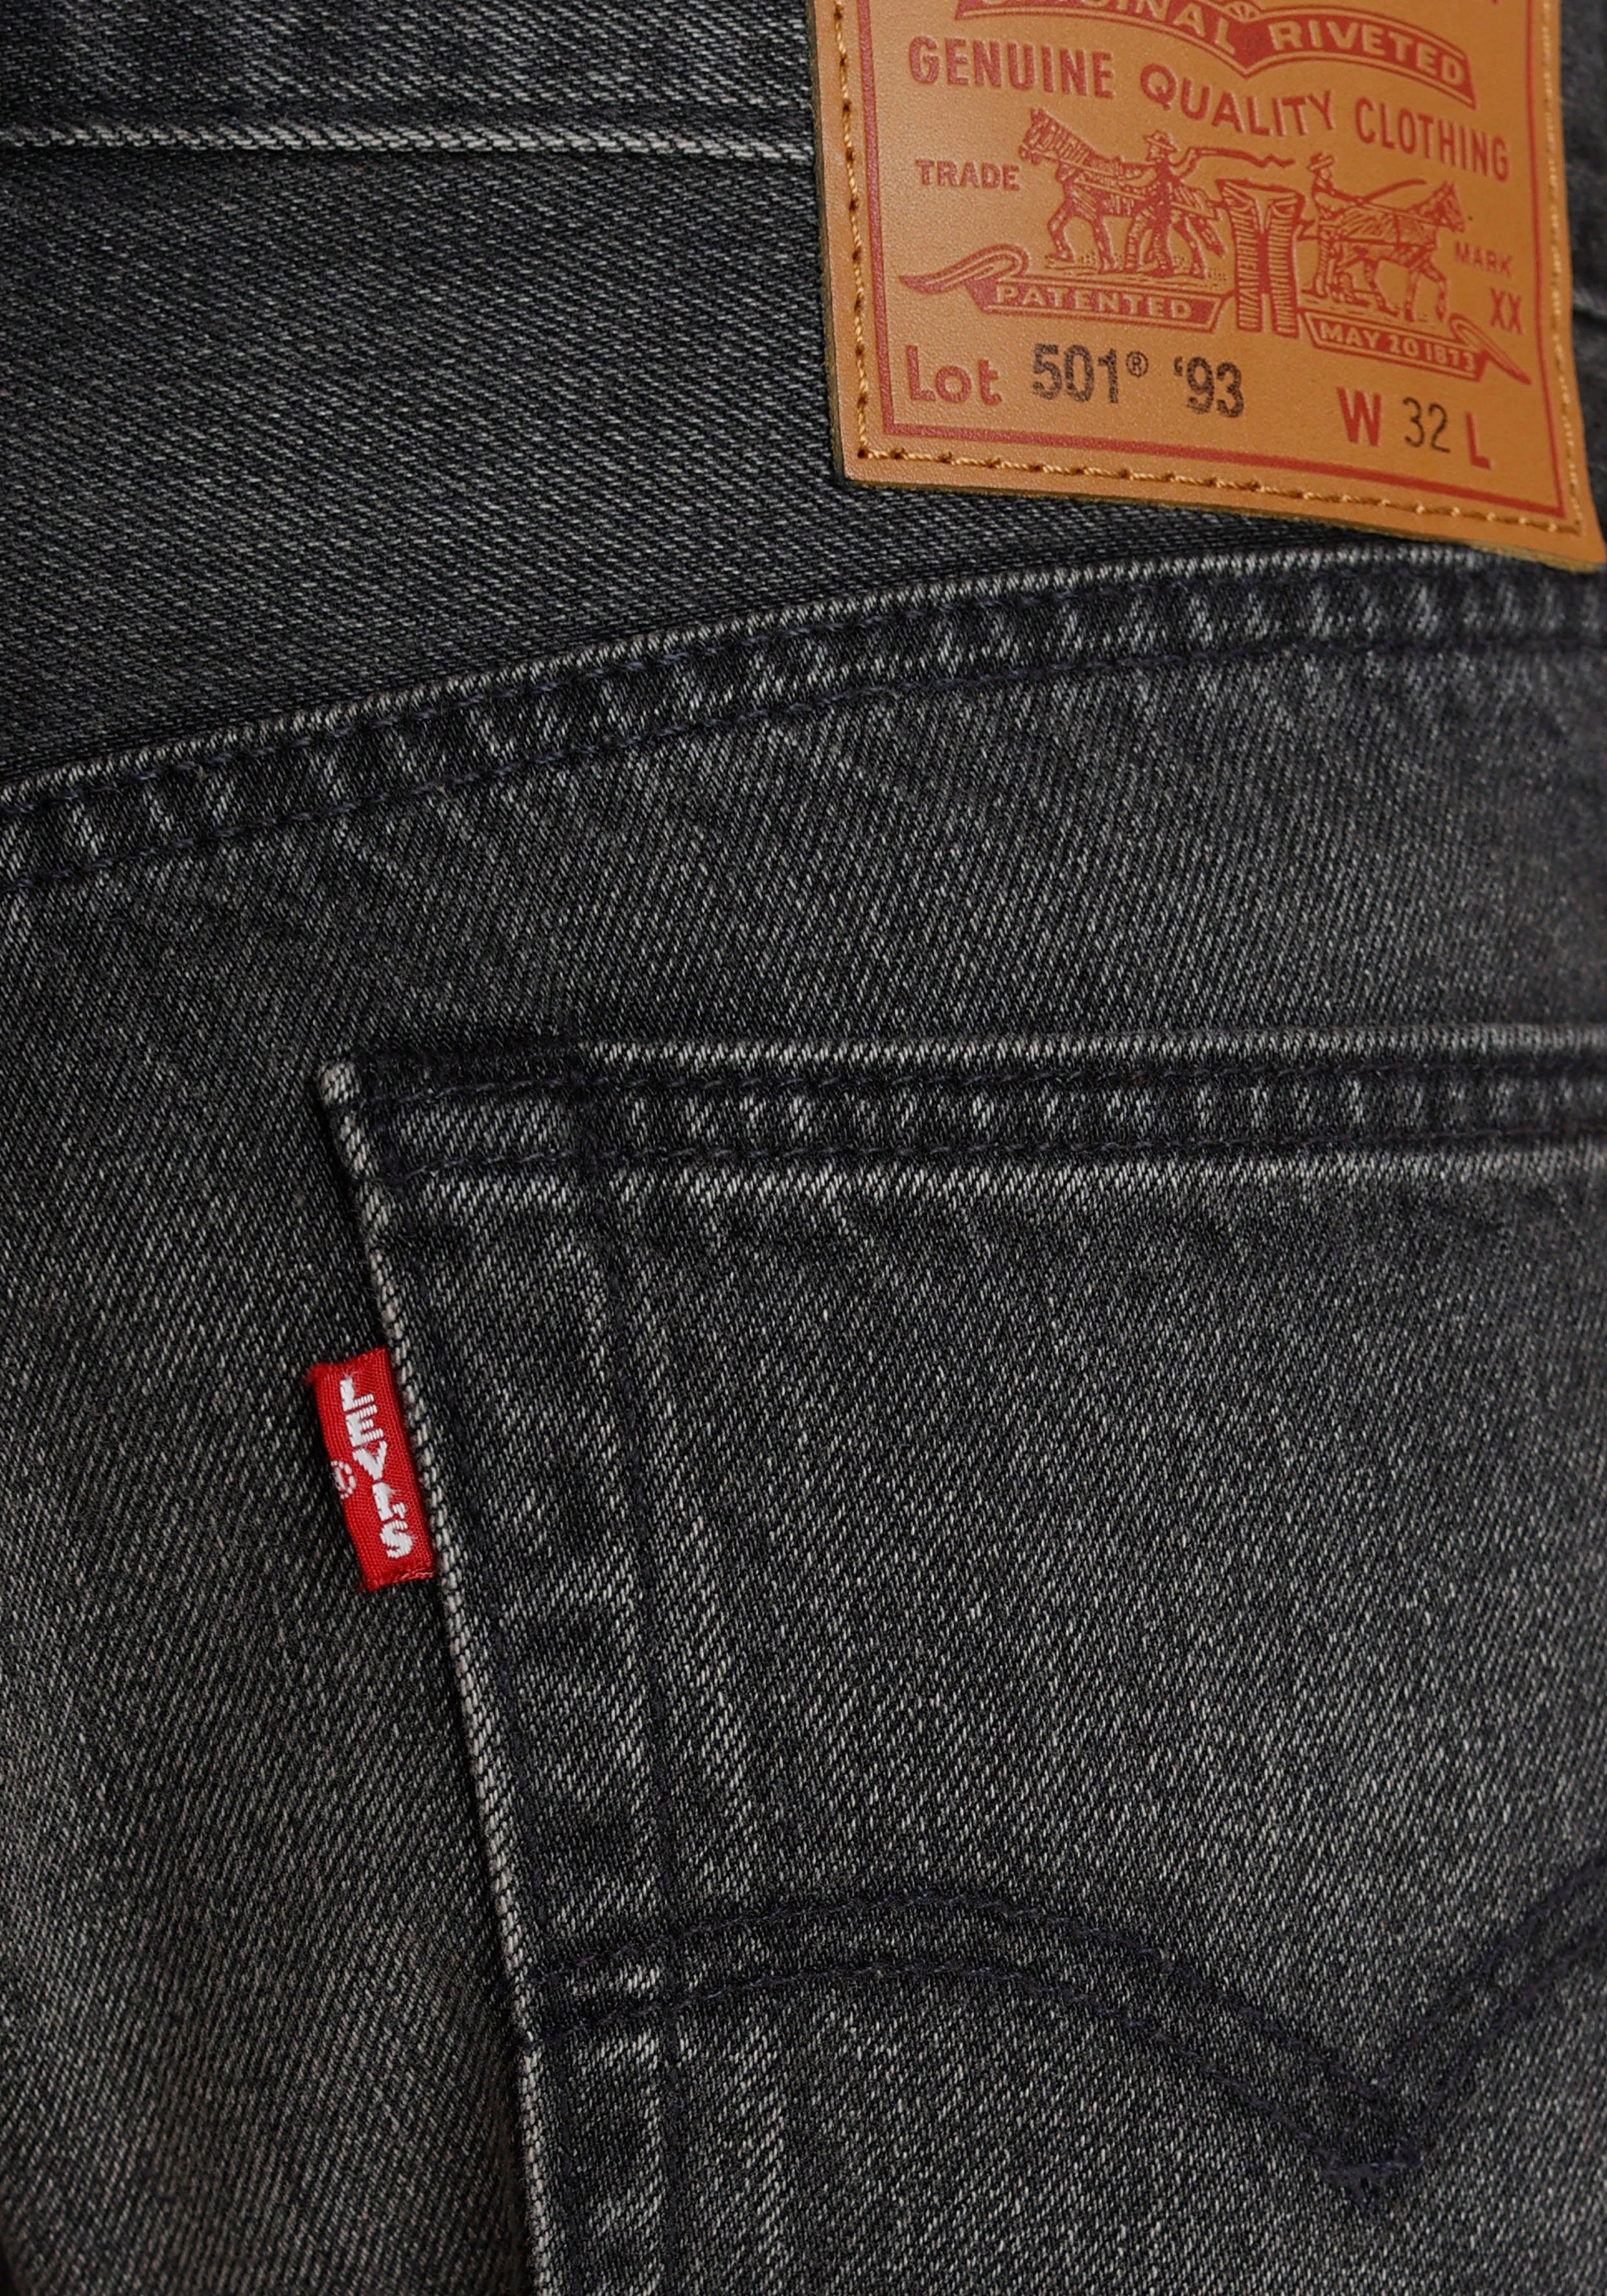 worn 501 Levi's® Jeansshorts black '93